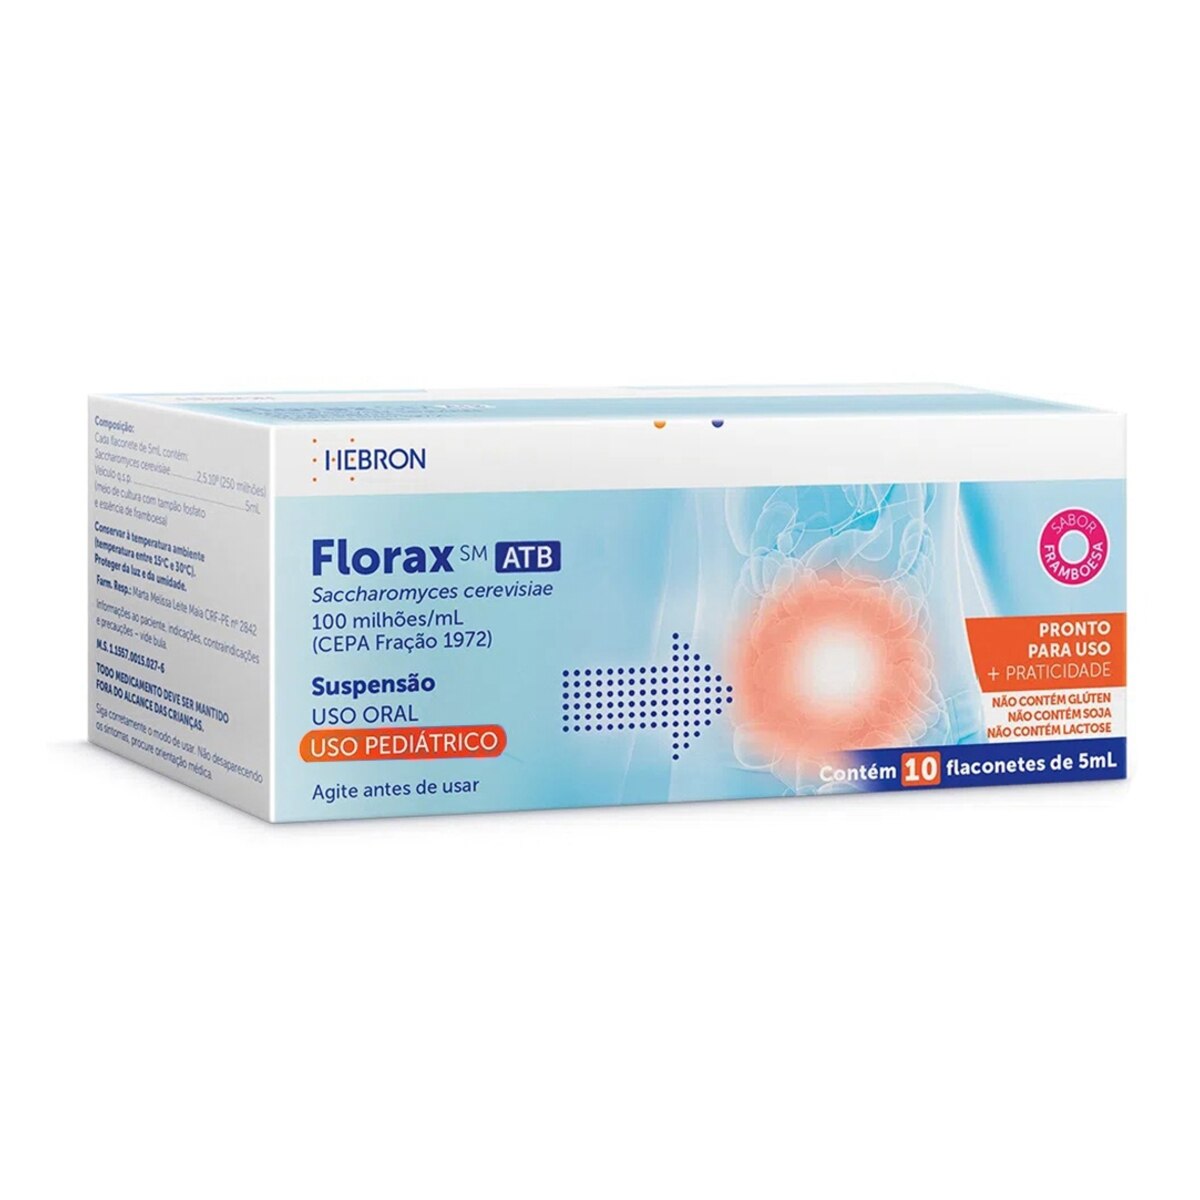 Florax SM ATB 100MI Suspensao Oral Pediatrico Framboesa 5 Flaconetes 10ml